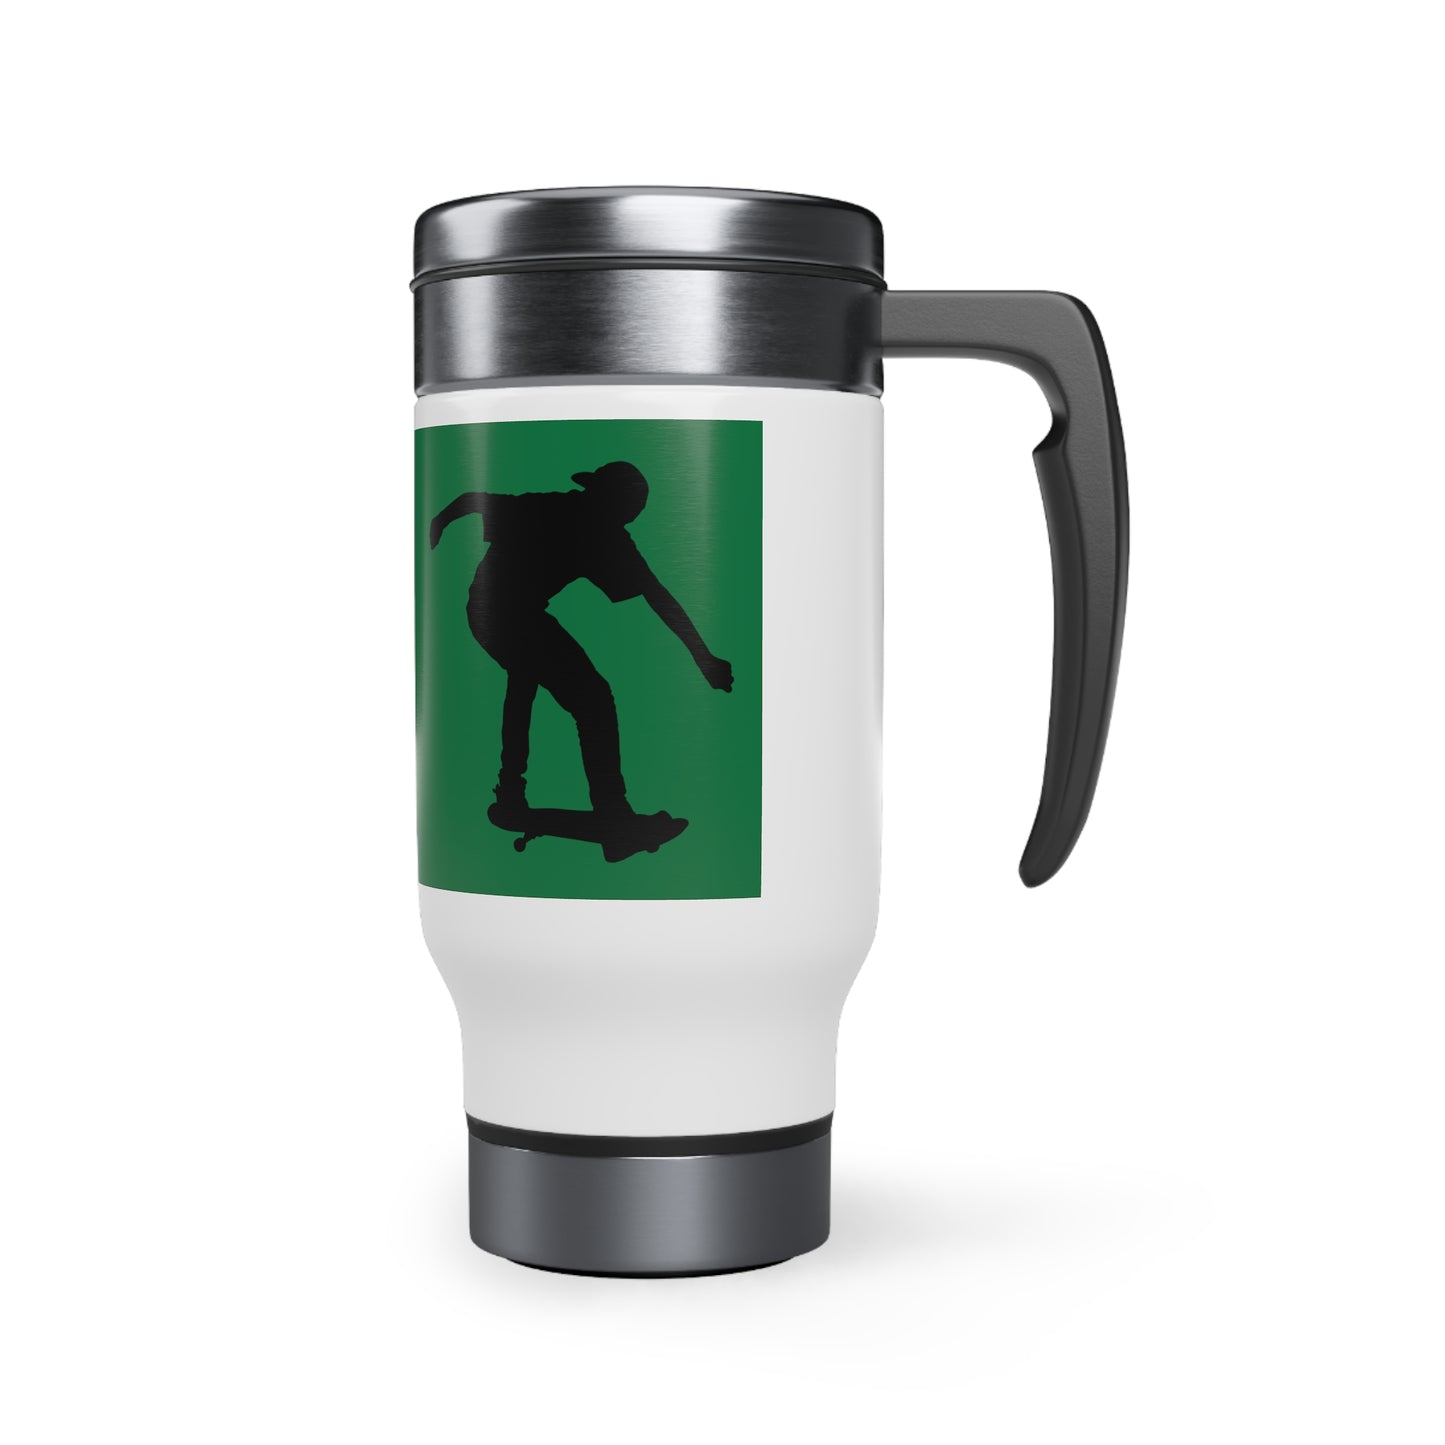 Stainless Steel Travel Mug with Handle, 14oz: Skateboarding Dark Green